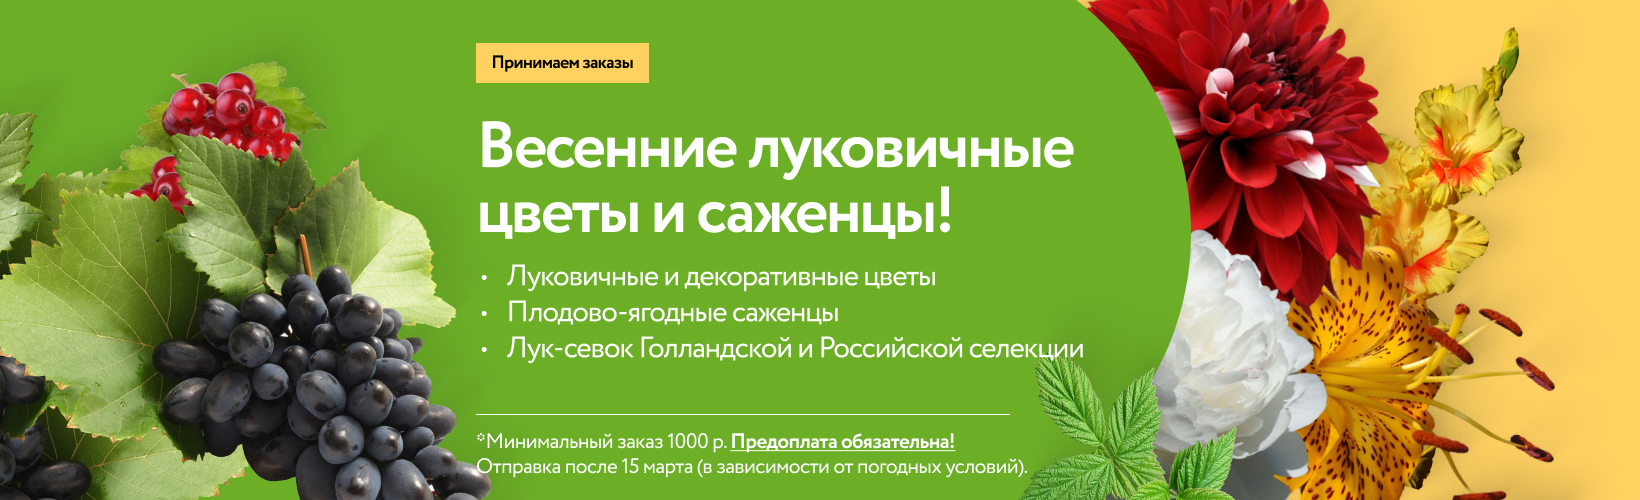 Магазин Саженцев Русский Огород